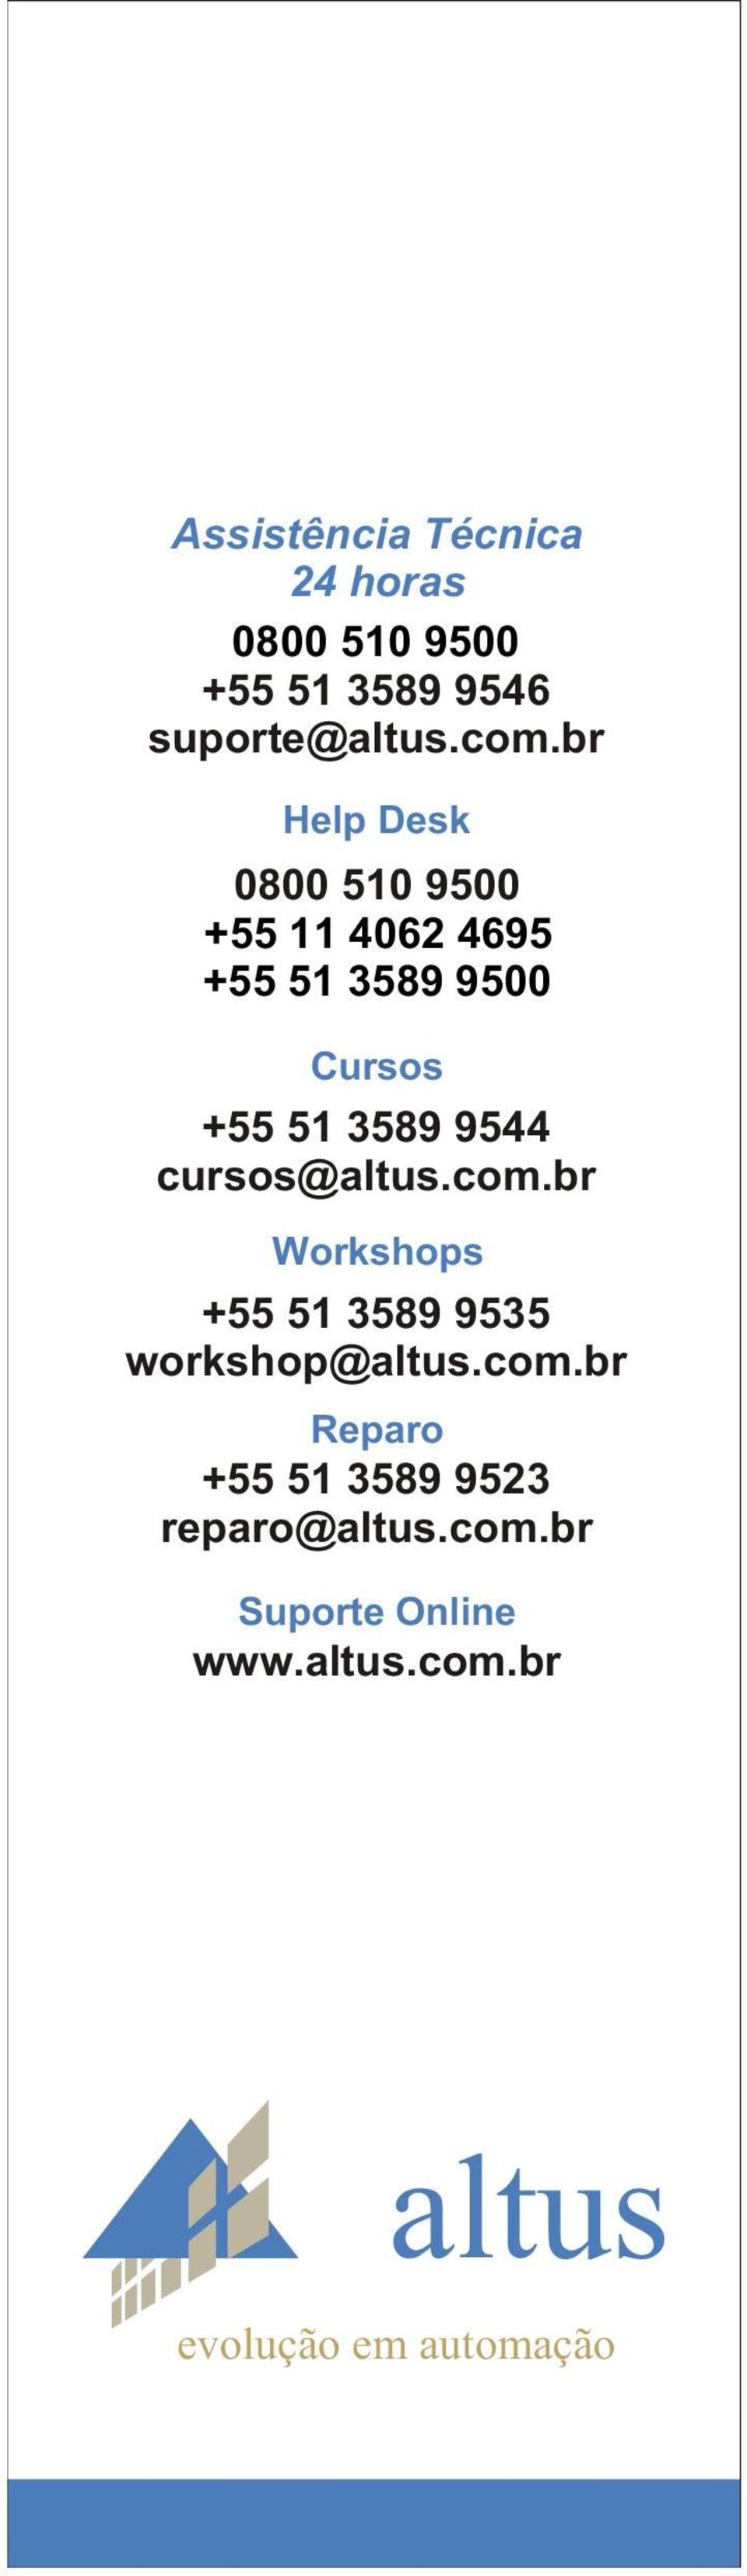 9544 cursos@altus.com.br Workshops +55 51 3589 9535 workshop@altus.com.br Reparo +55 51 3589 9523 reparo@altus.